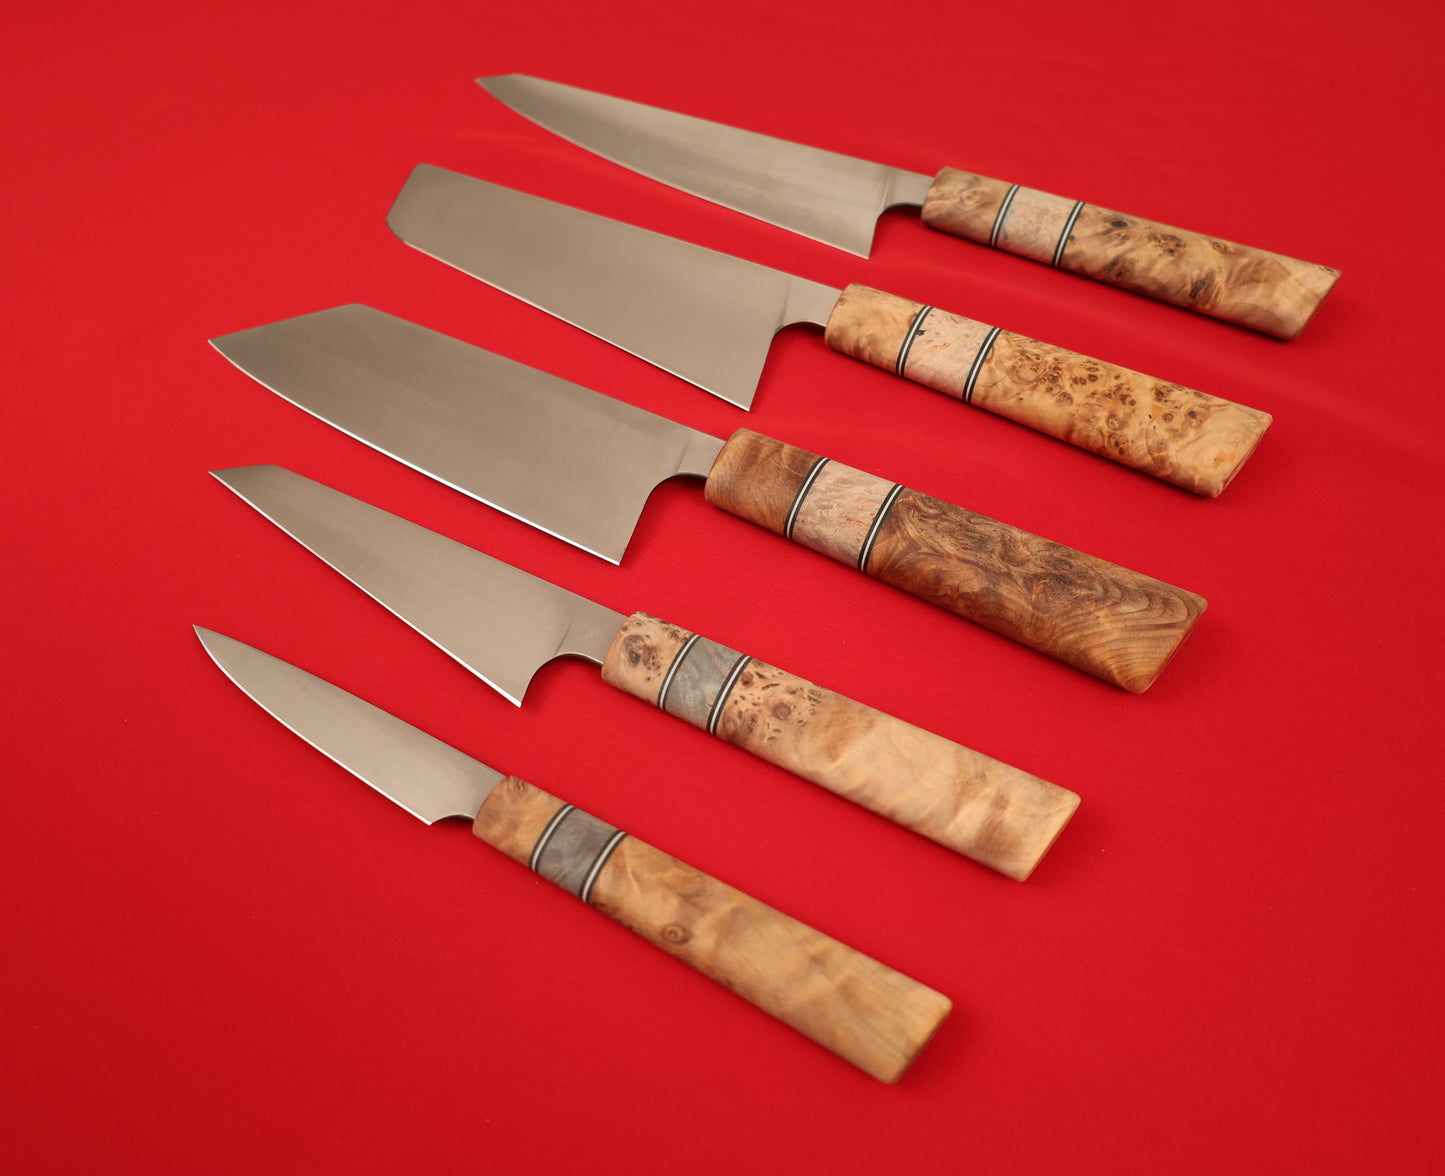 Gift set of kitchen knives